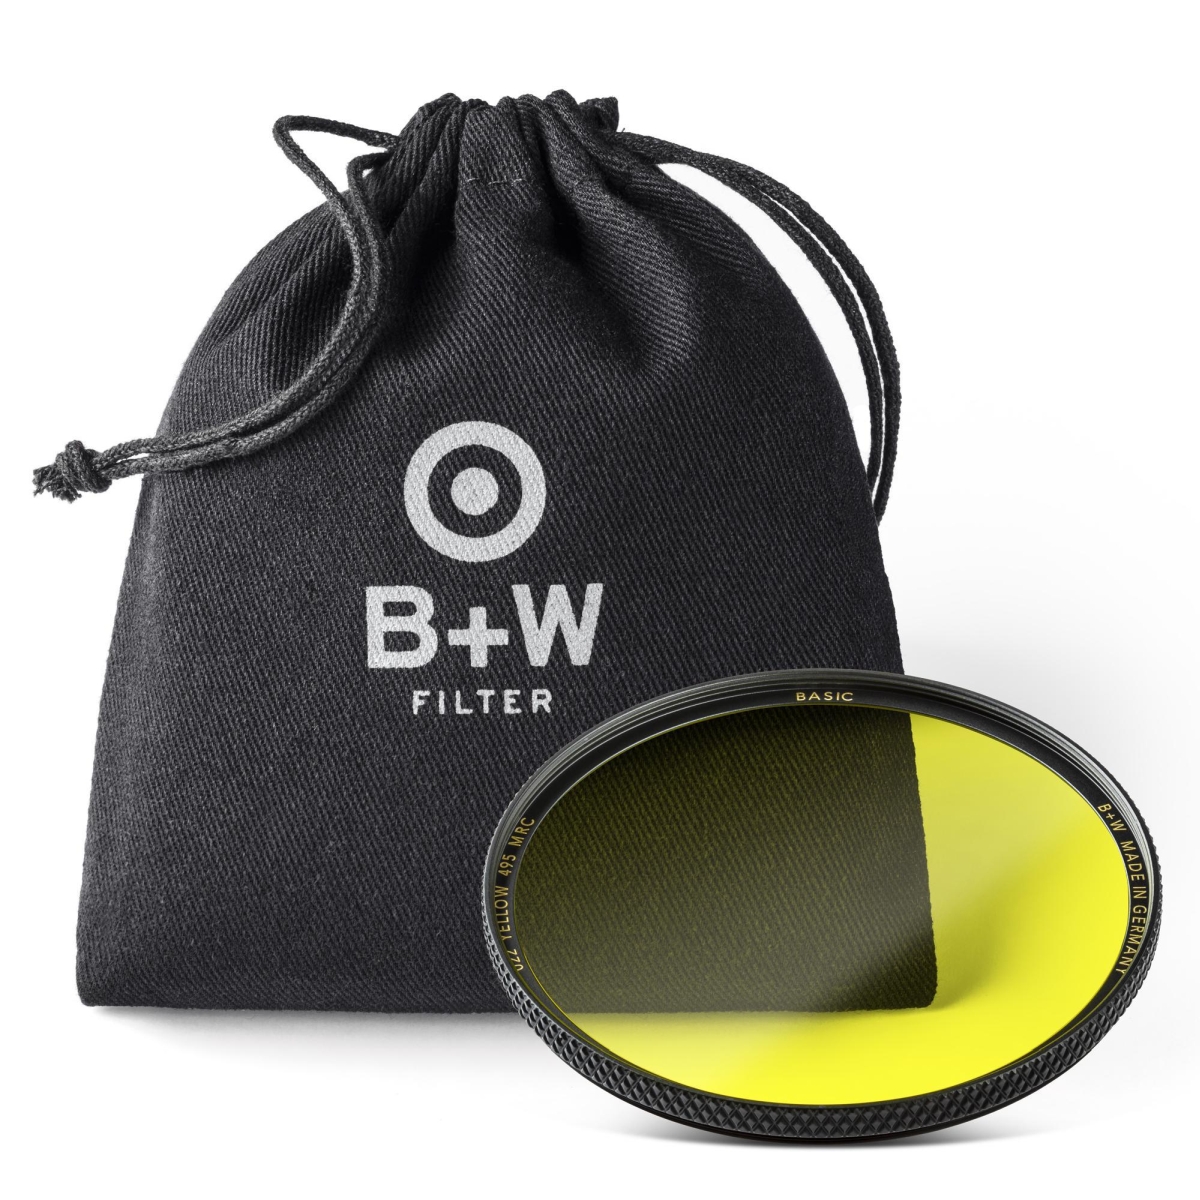 B+W Gelb Filter 60 mm 495 MRC Basic